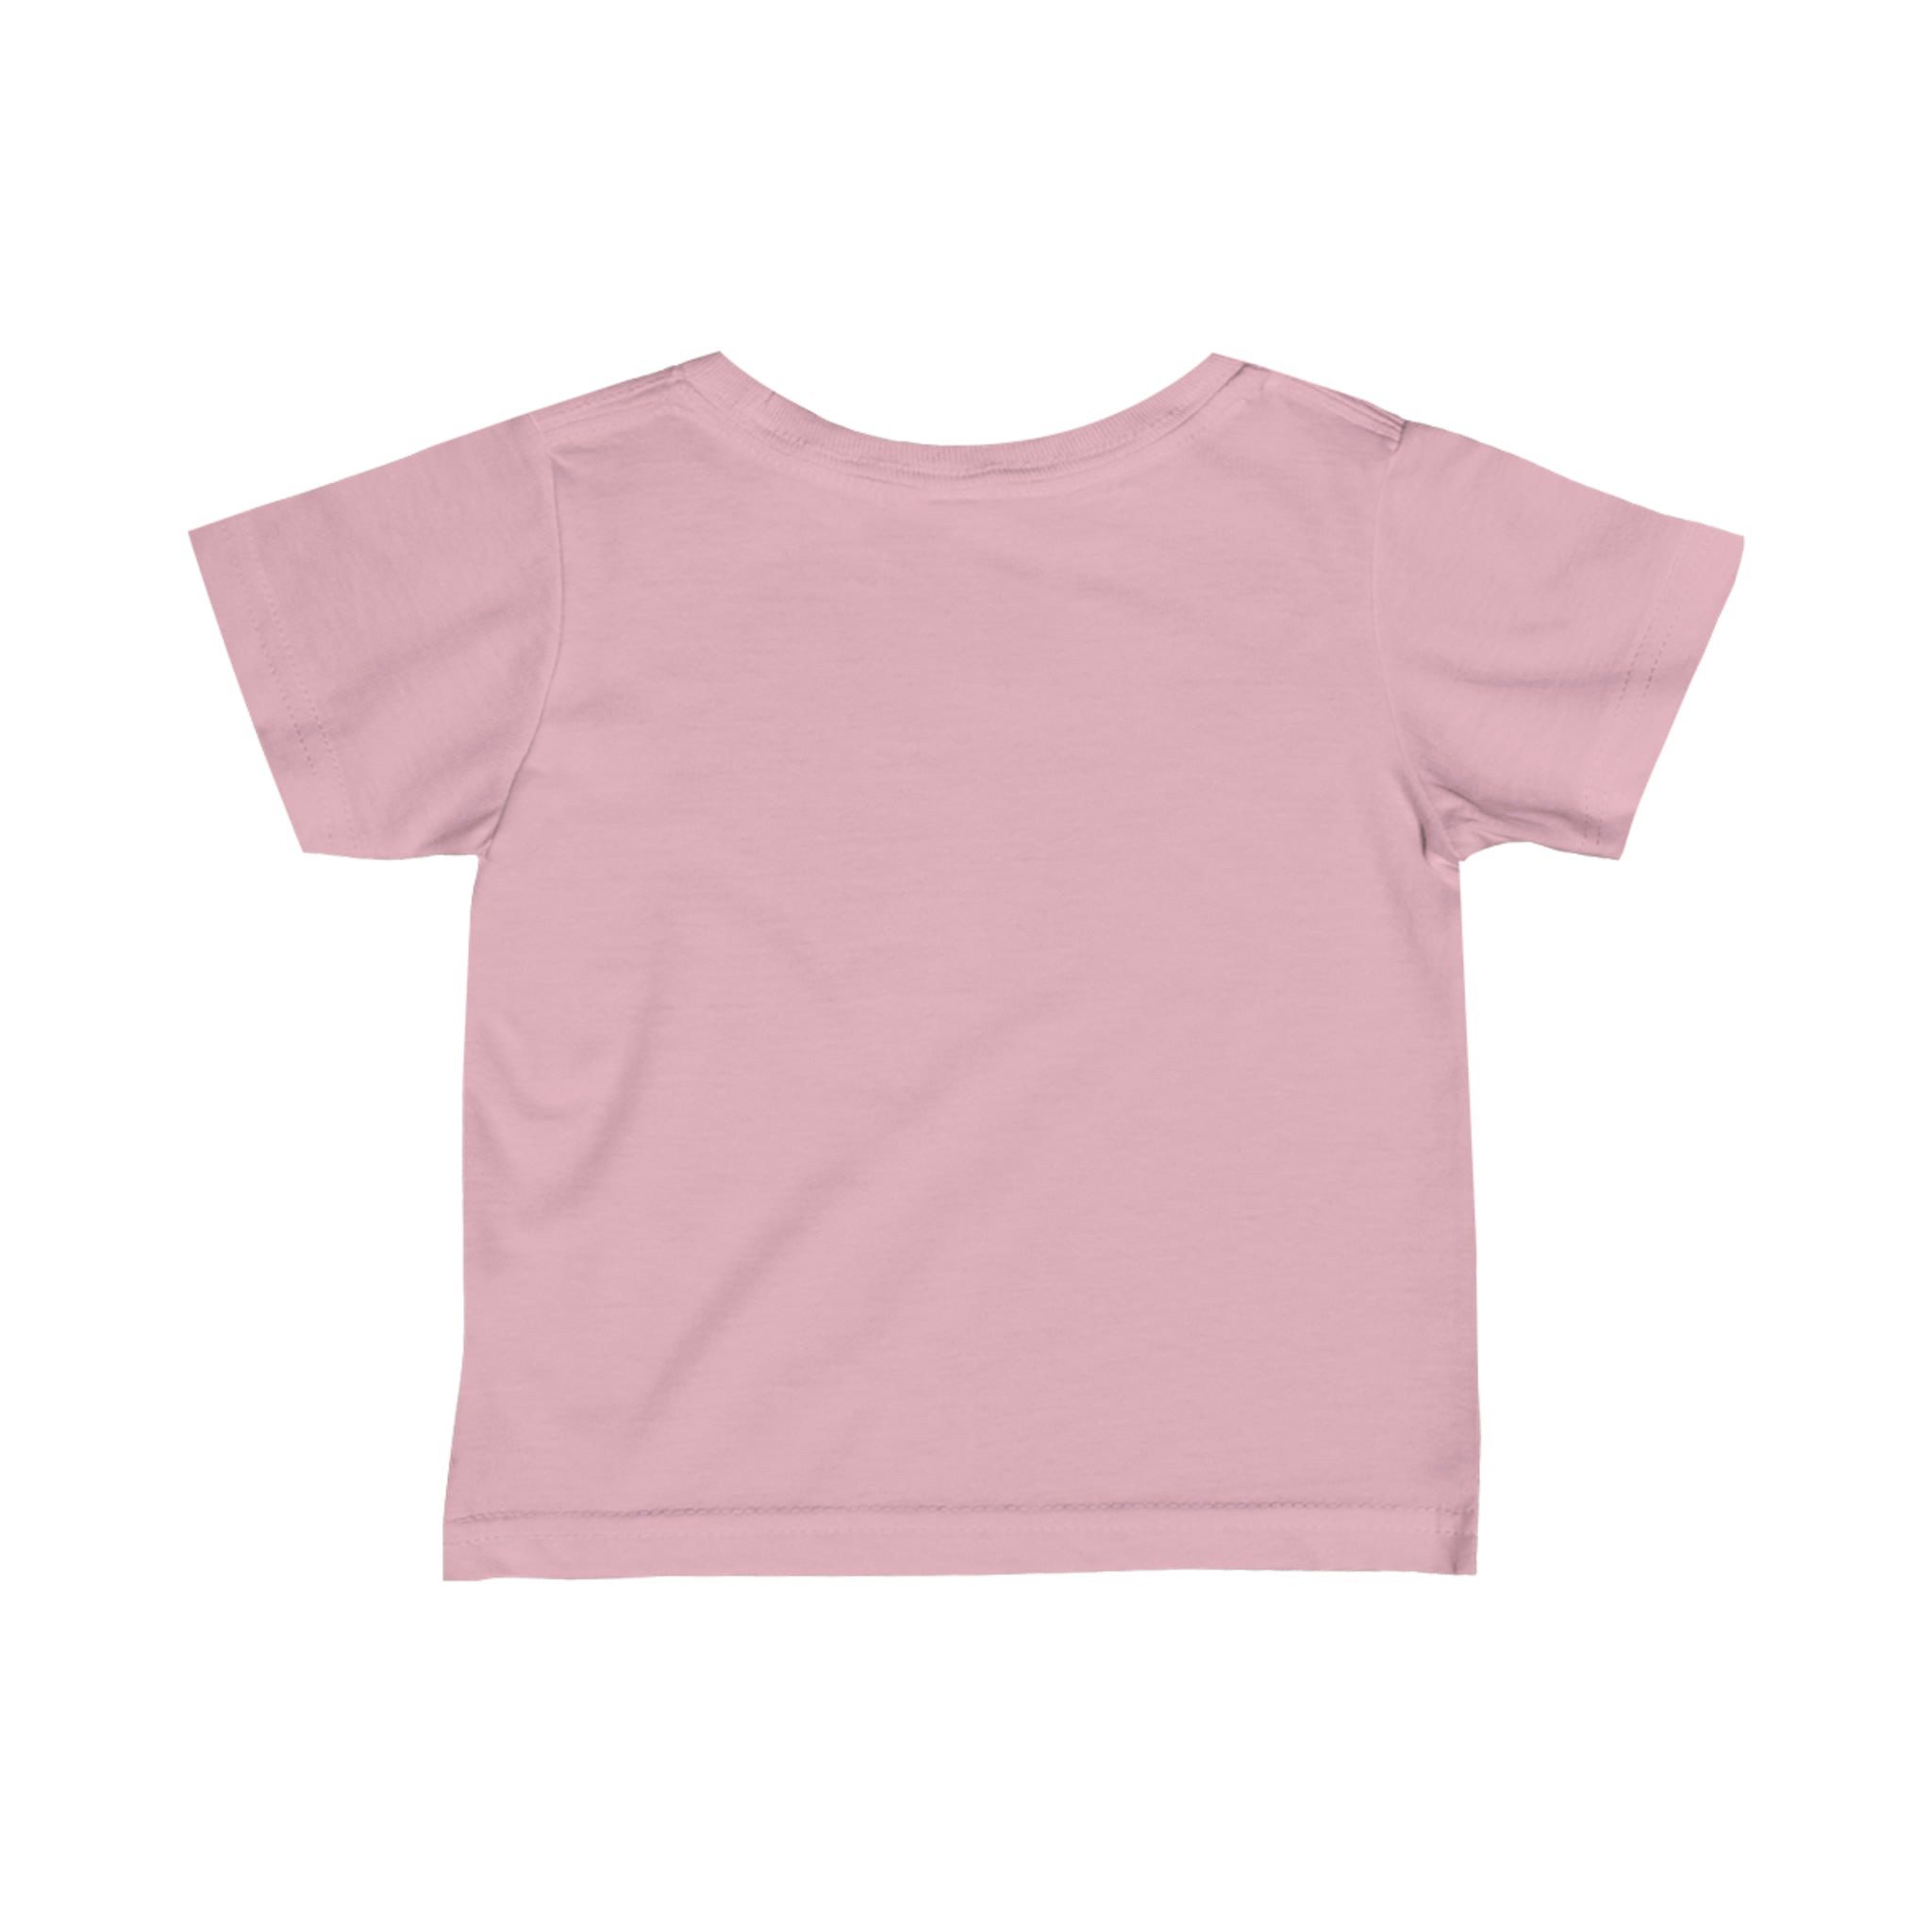 Mount Calvary Toddler Shirt